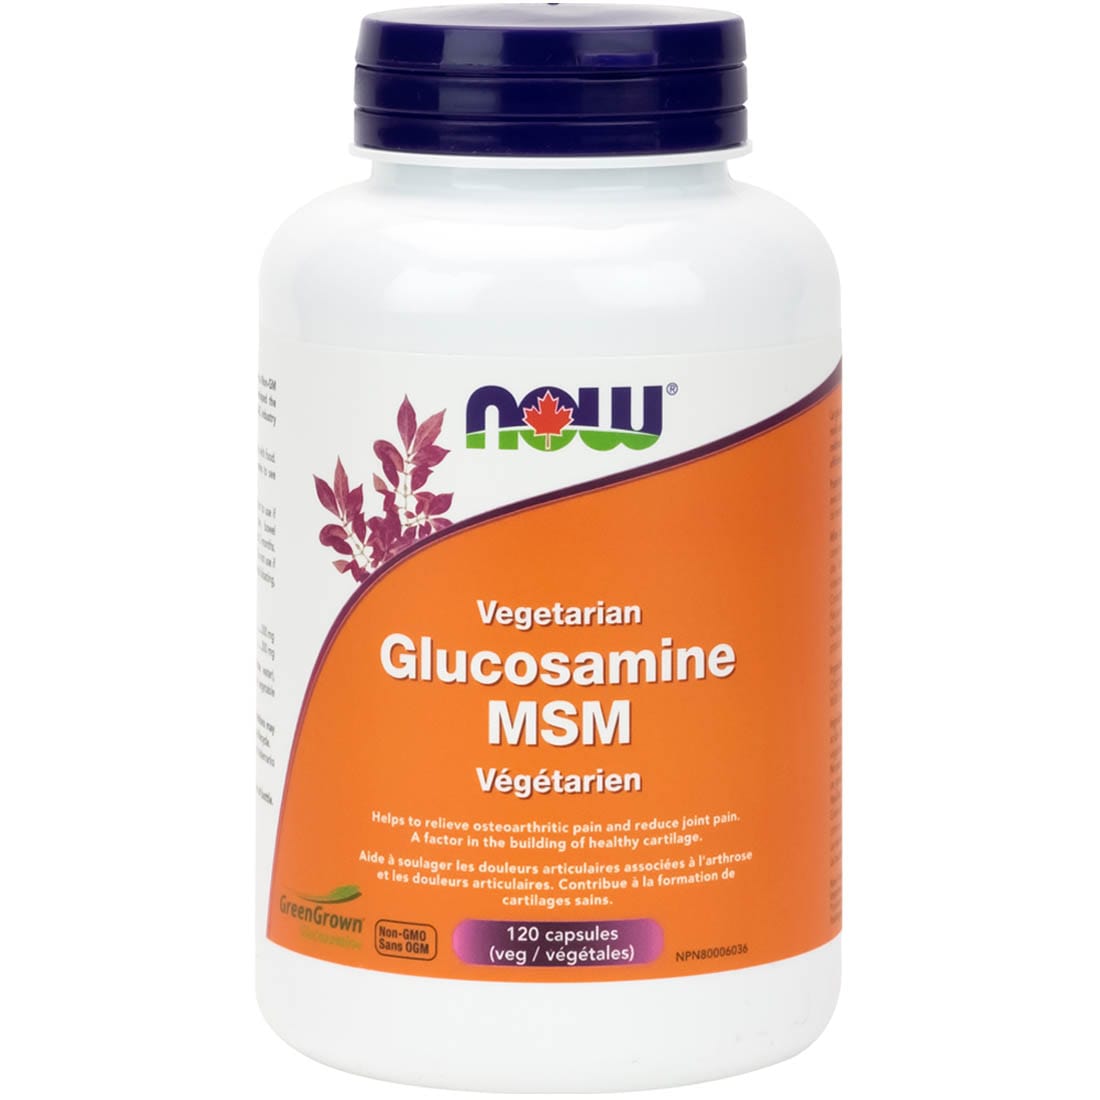 NOW Vegetarian Glucosamine & MSM, 500/333, 120 Vcaps